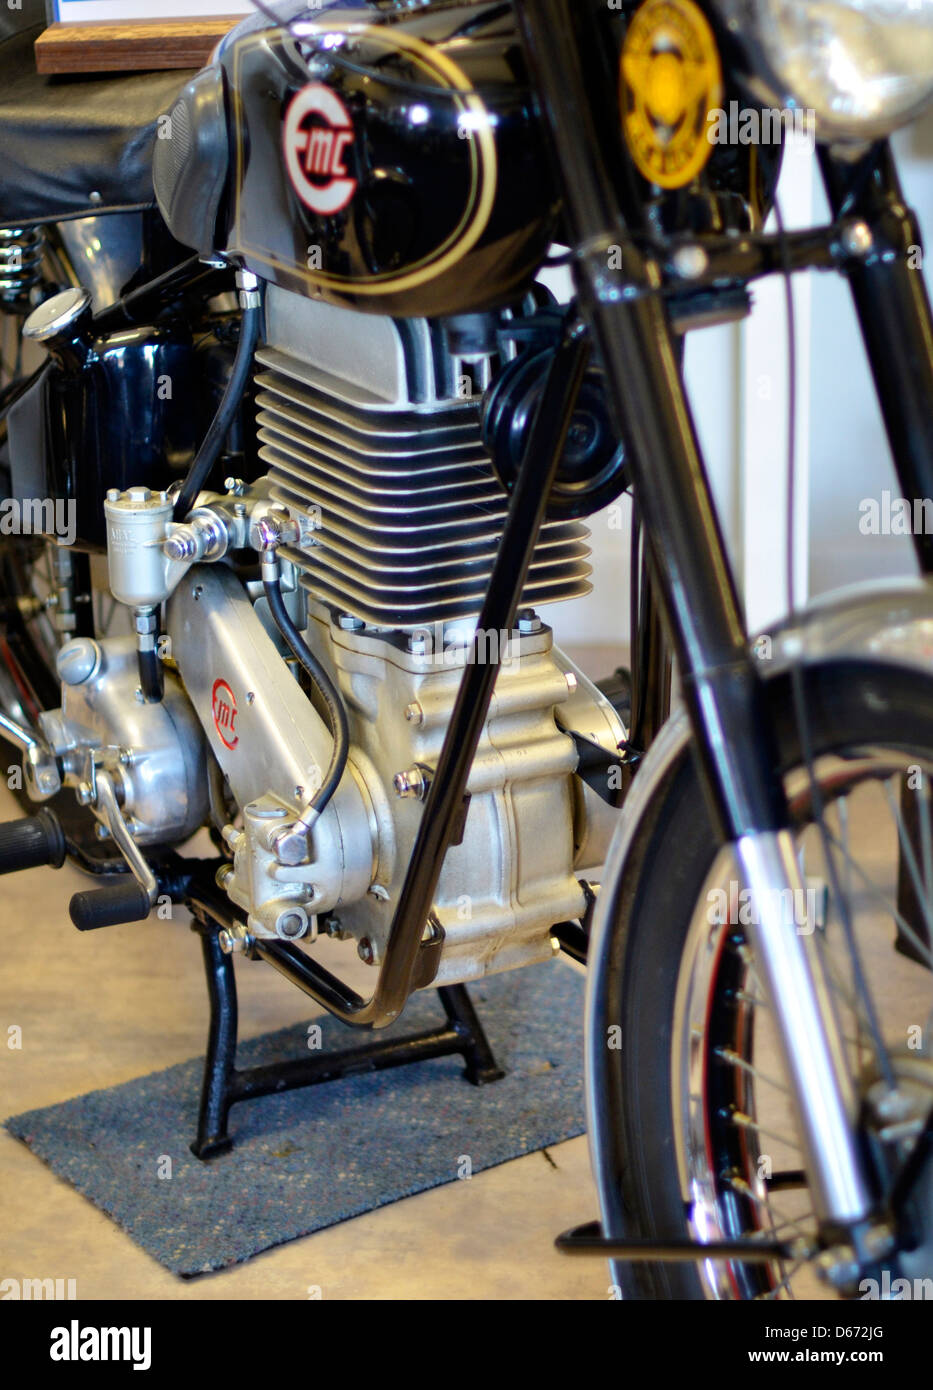 emc 1948 split single two stroke motorcycle engine Stock Photo - Alamy